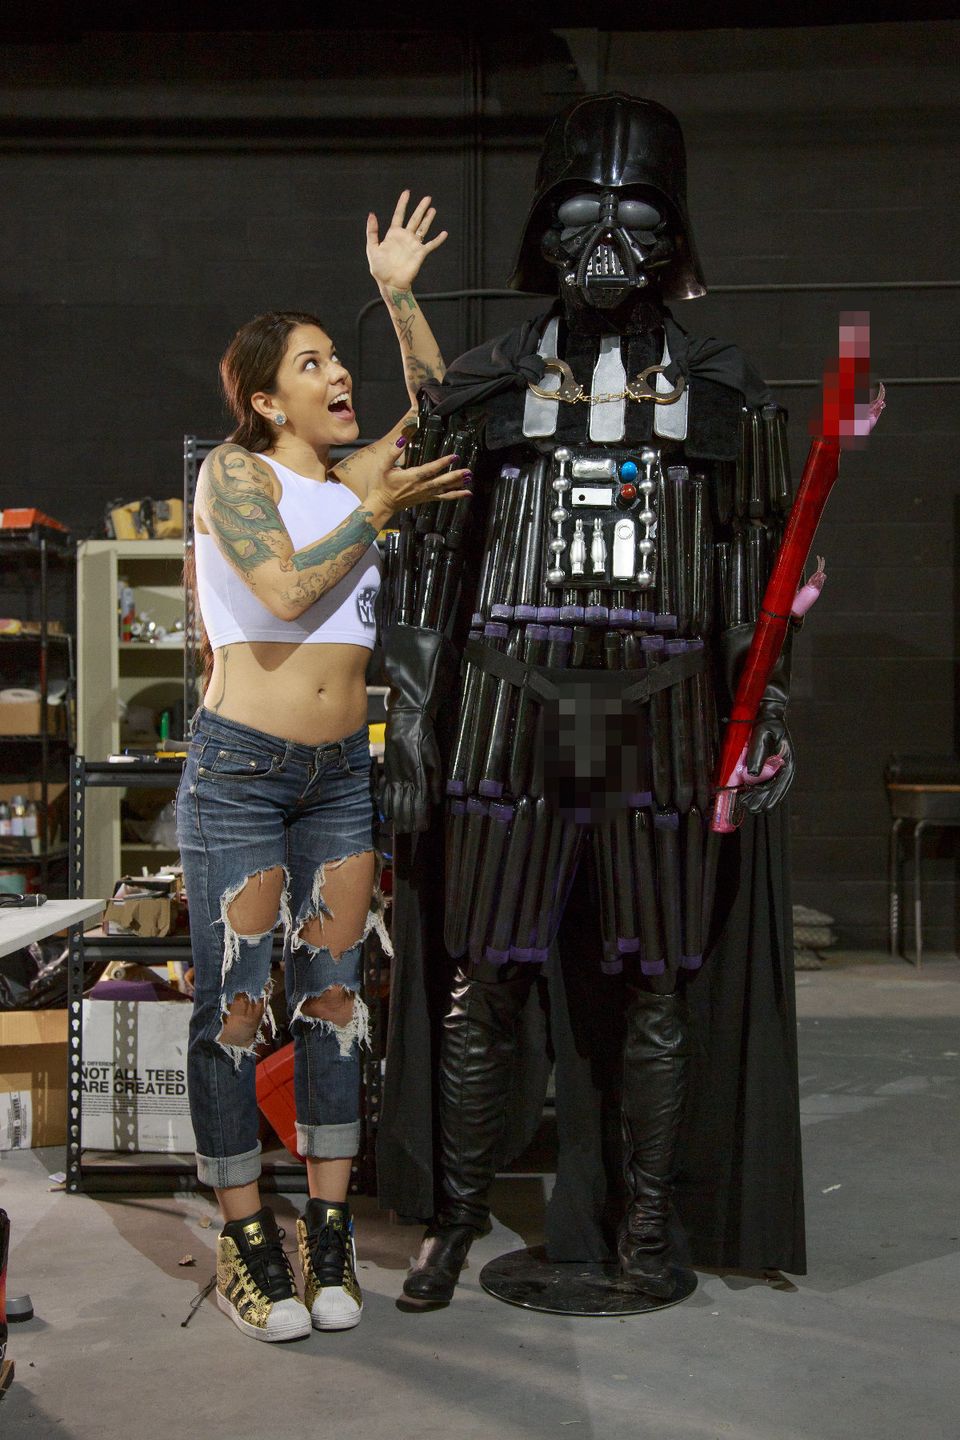 Porn Star Kayla Jane Danger Builds Darth Vader Using Sex Toys Nsfw Huffpost Uk Weird News